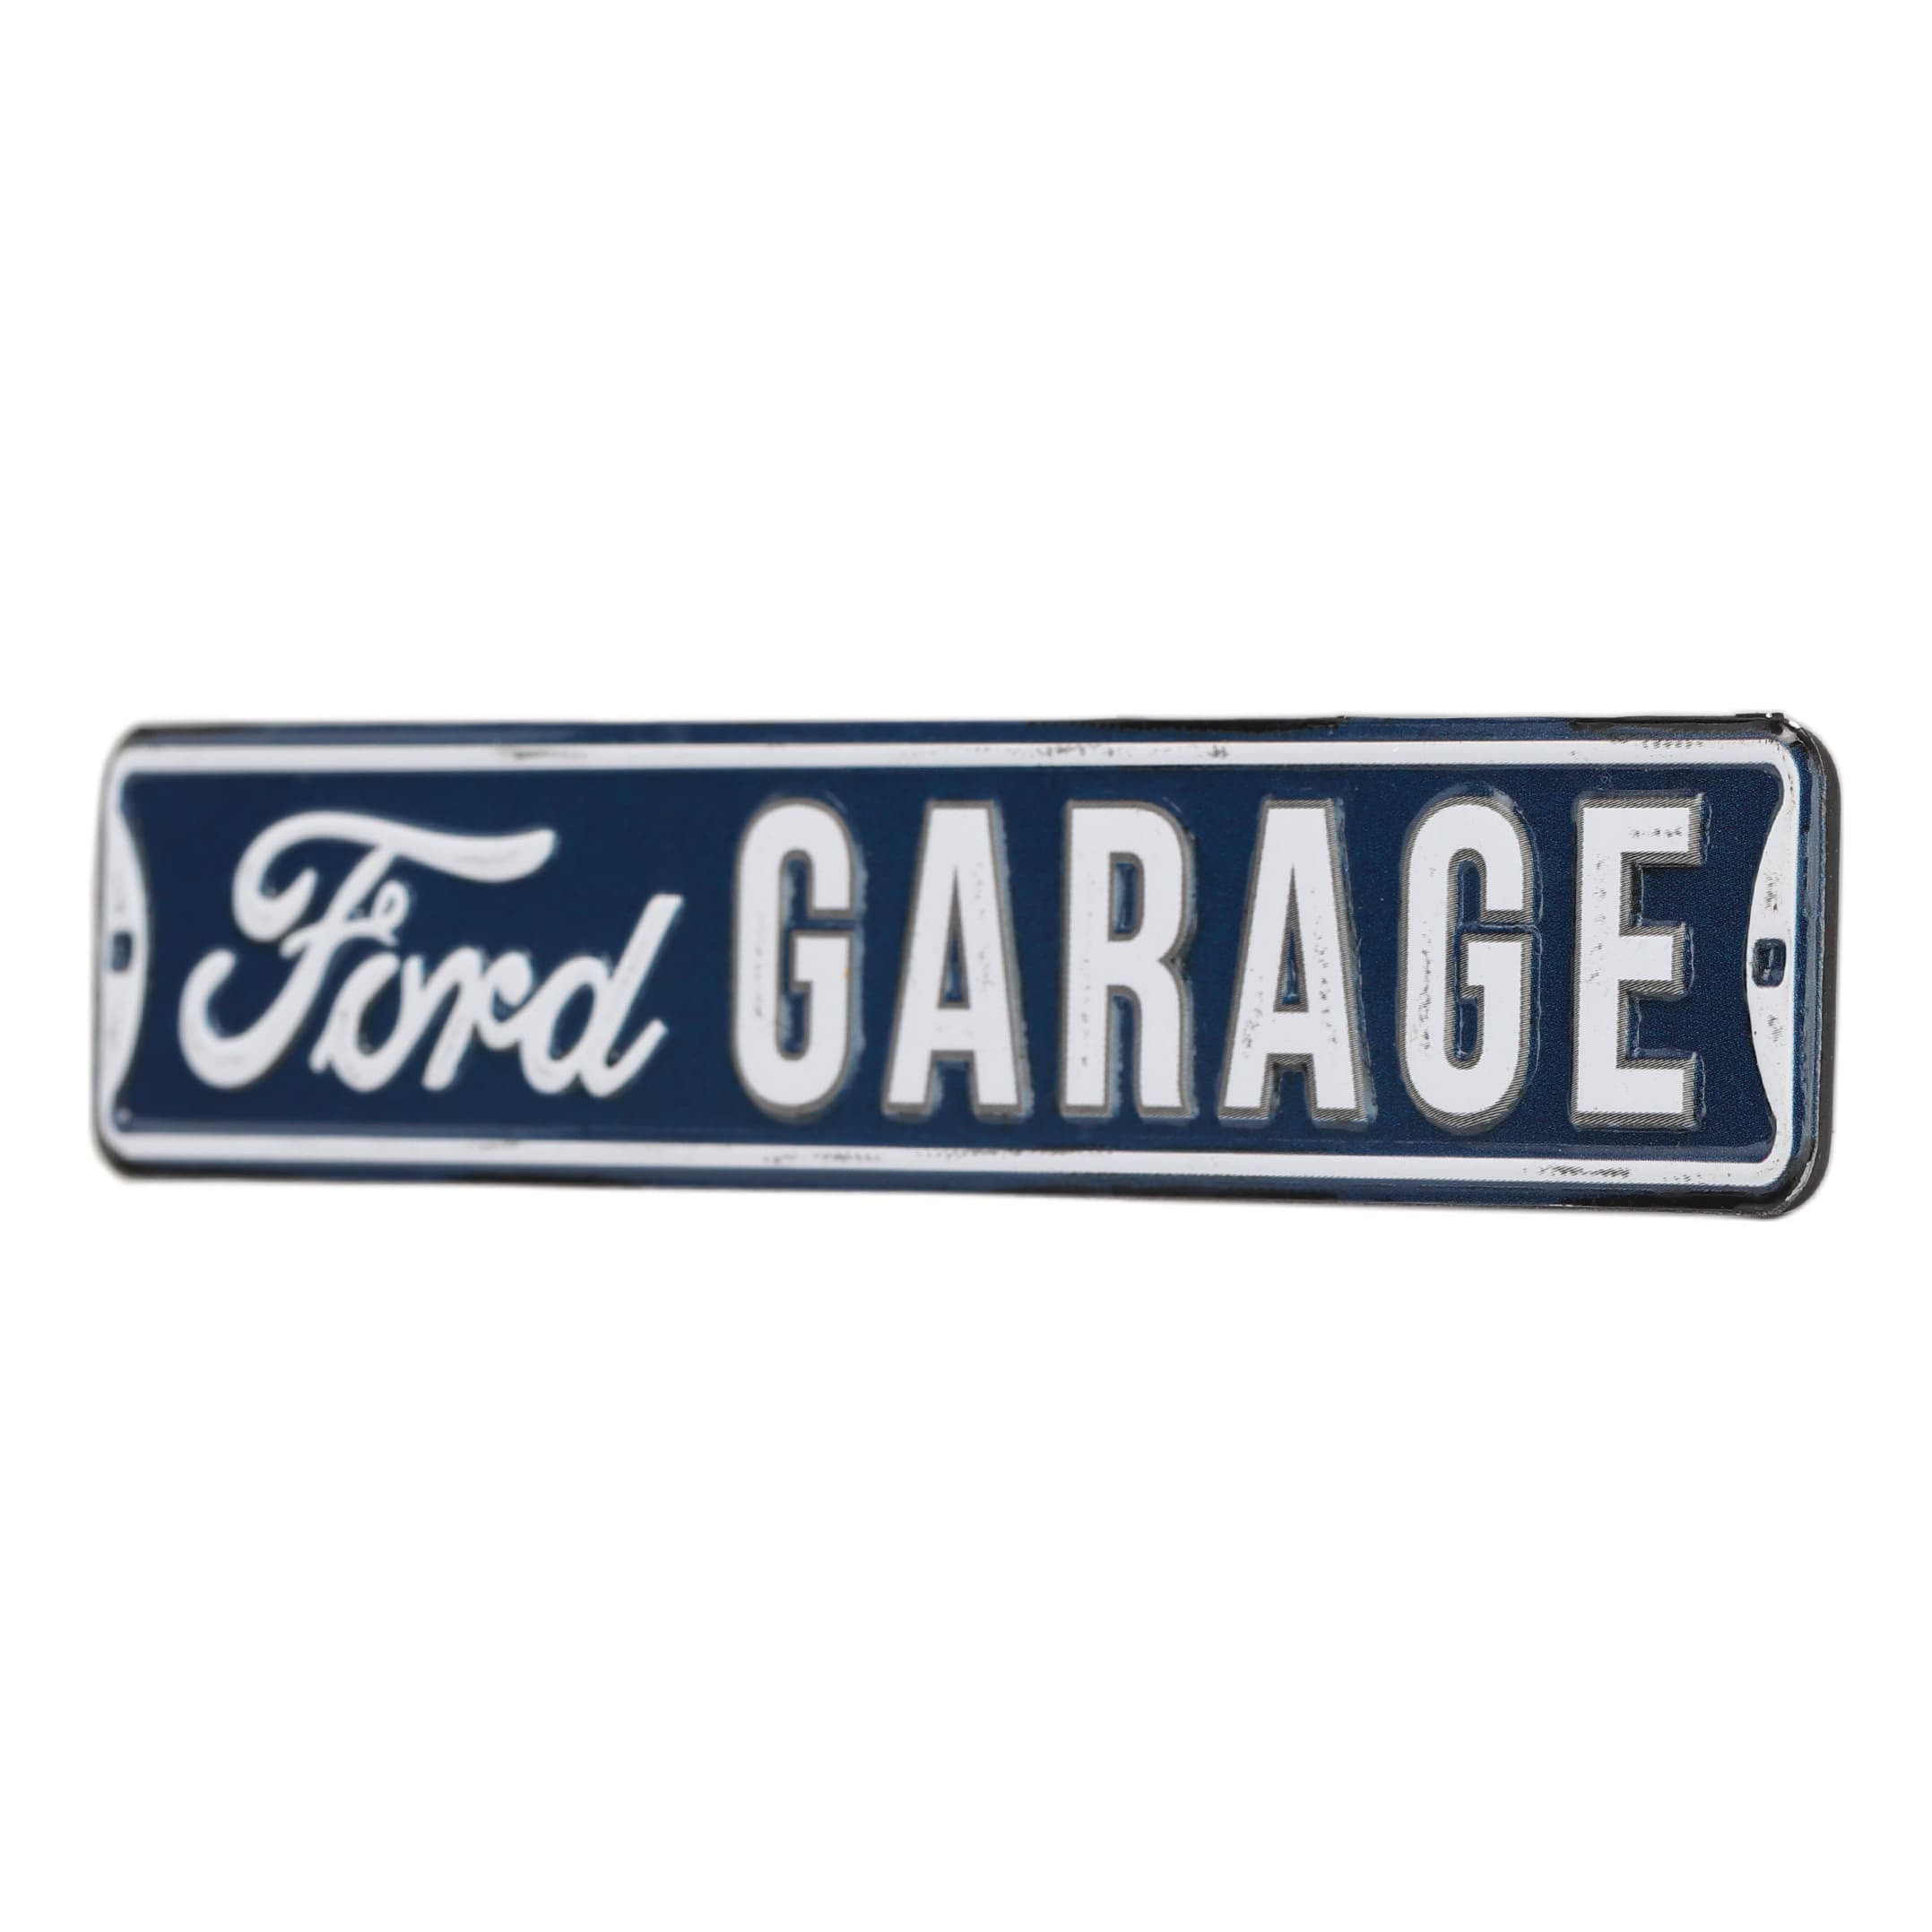 Open Roads Ford Garage Street Sign Magnet